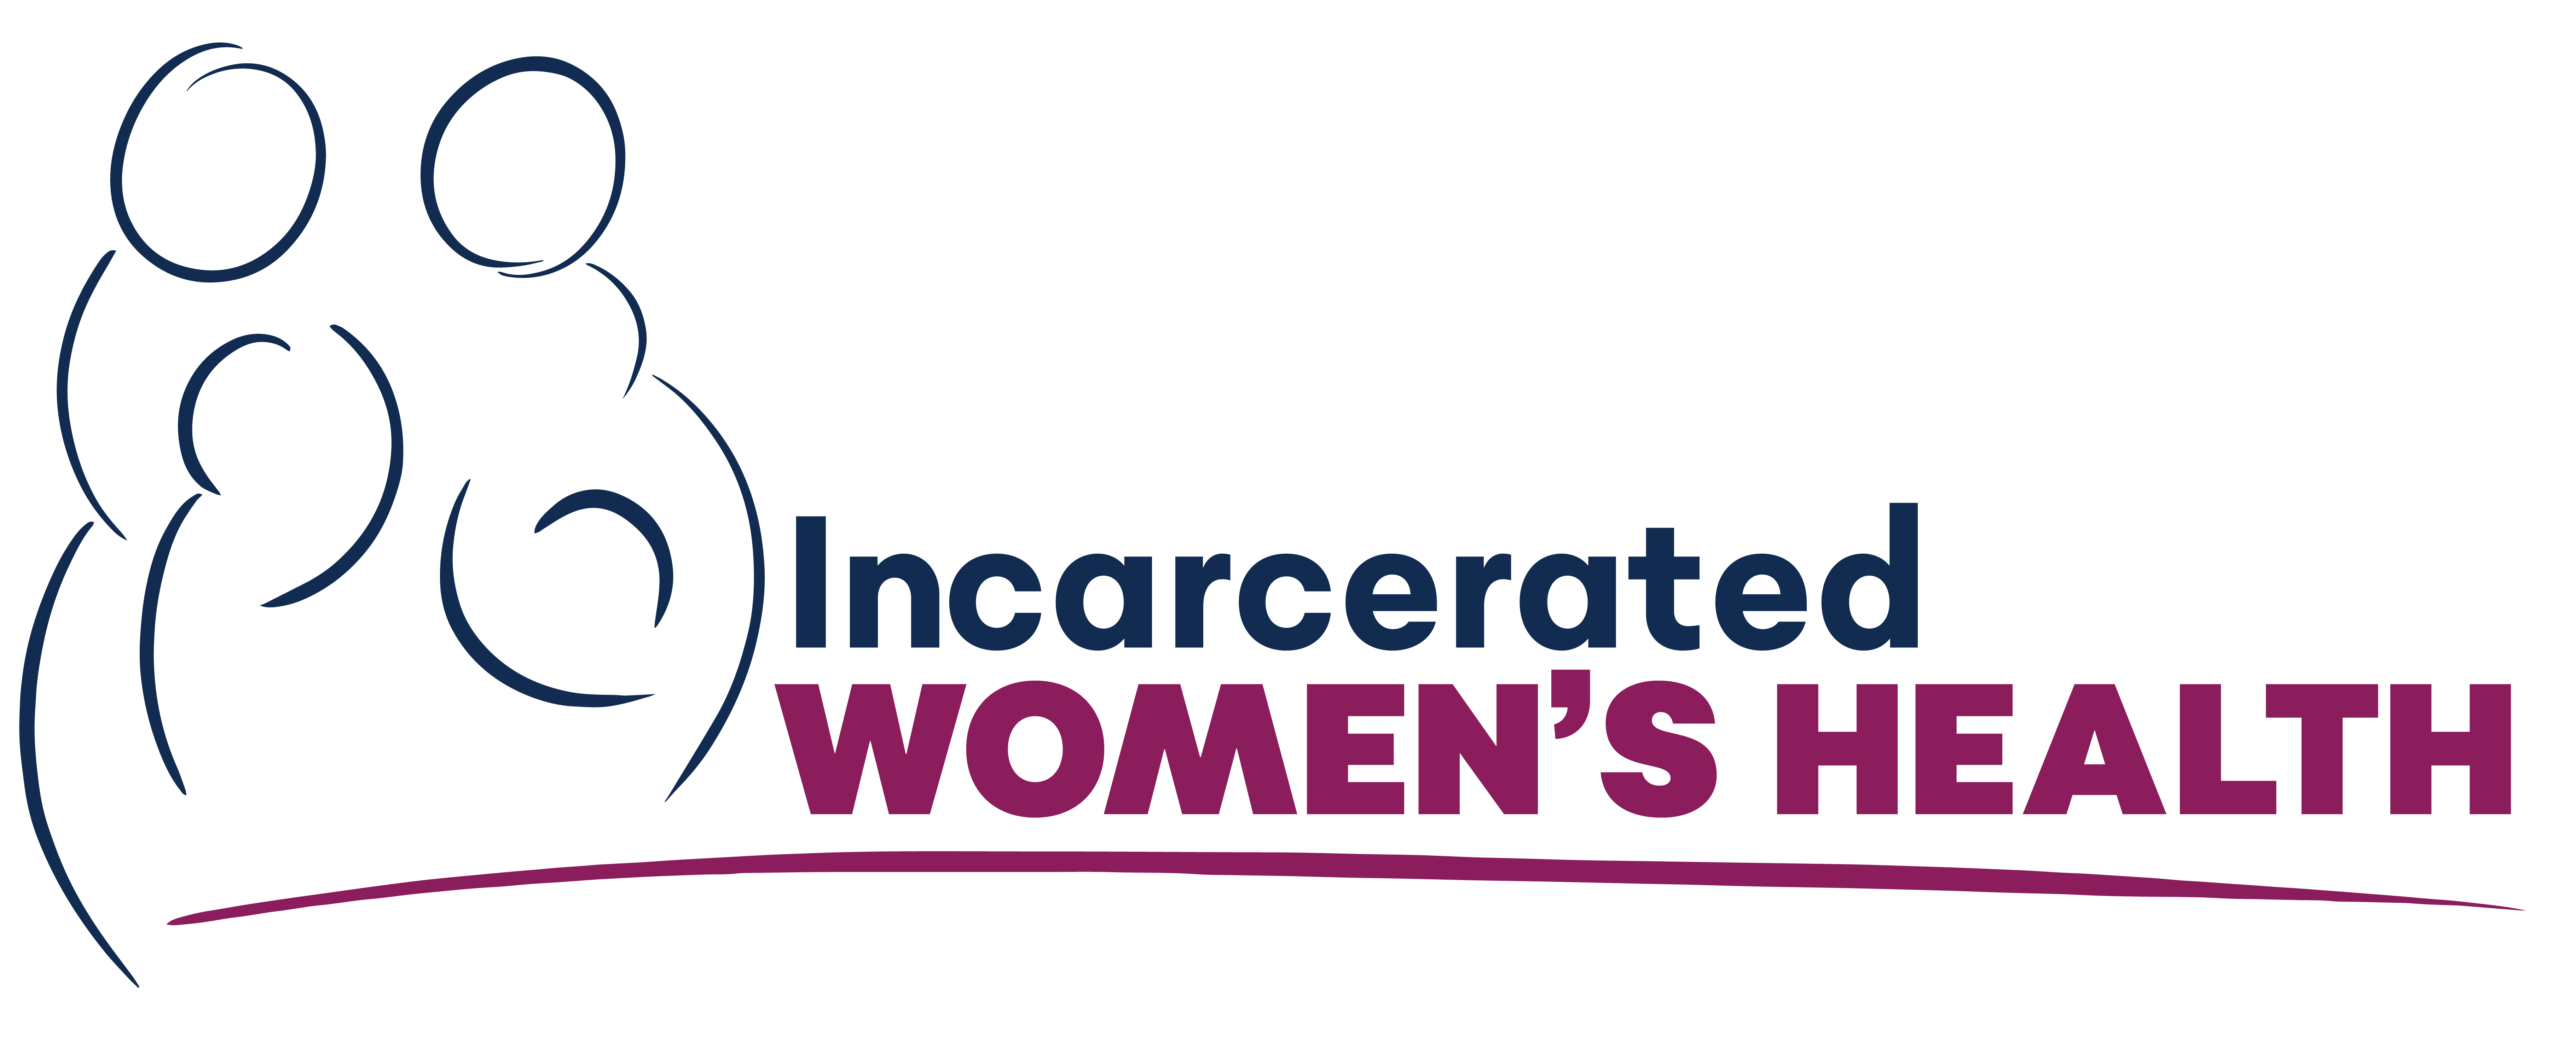 Incarcerated Women’s Health